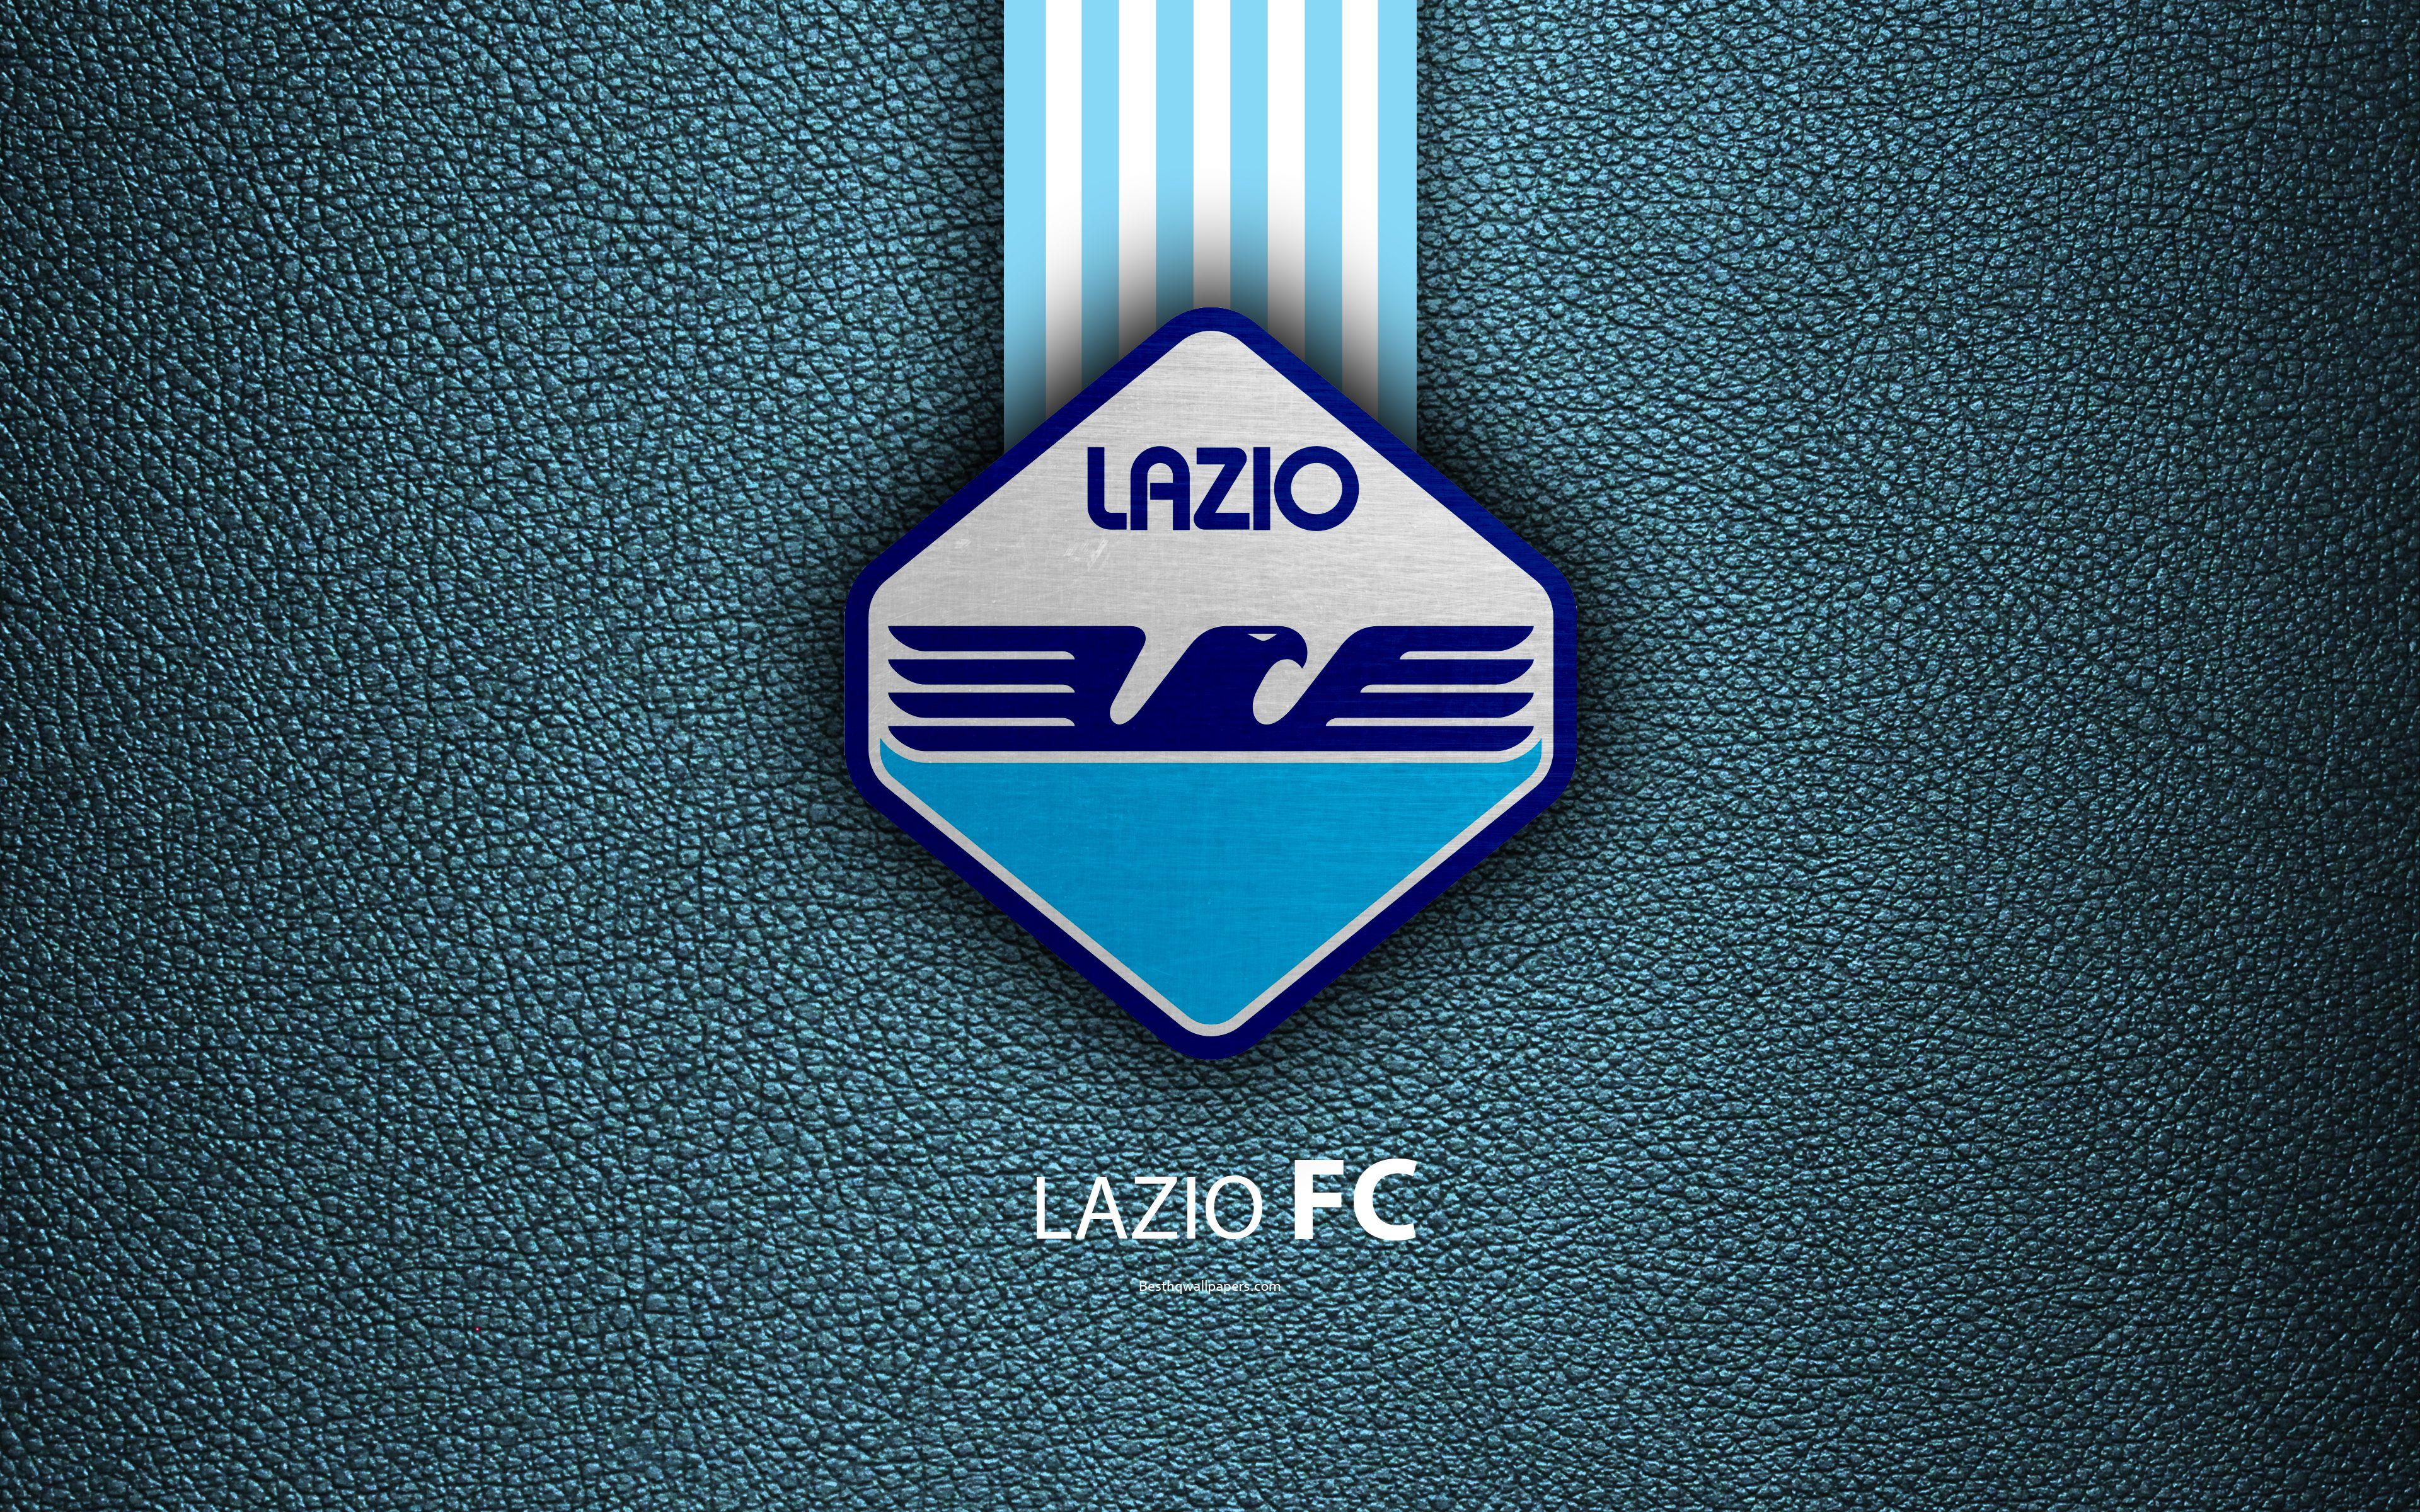 Download wallpaper Lazio FC, 4k, Italian football club, Serie A